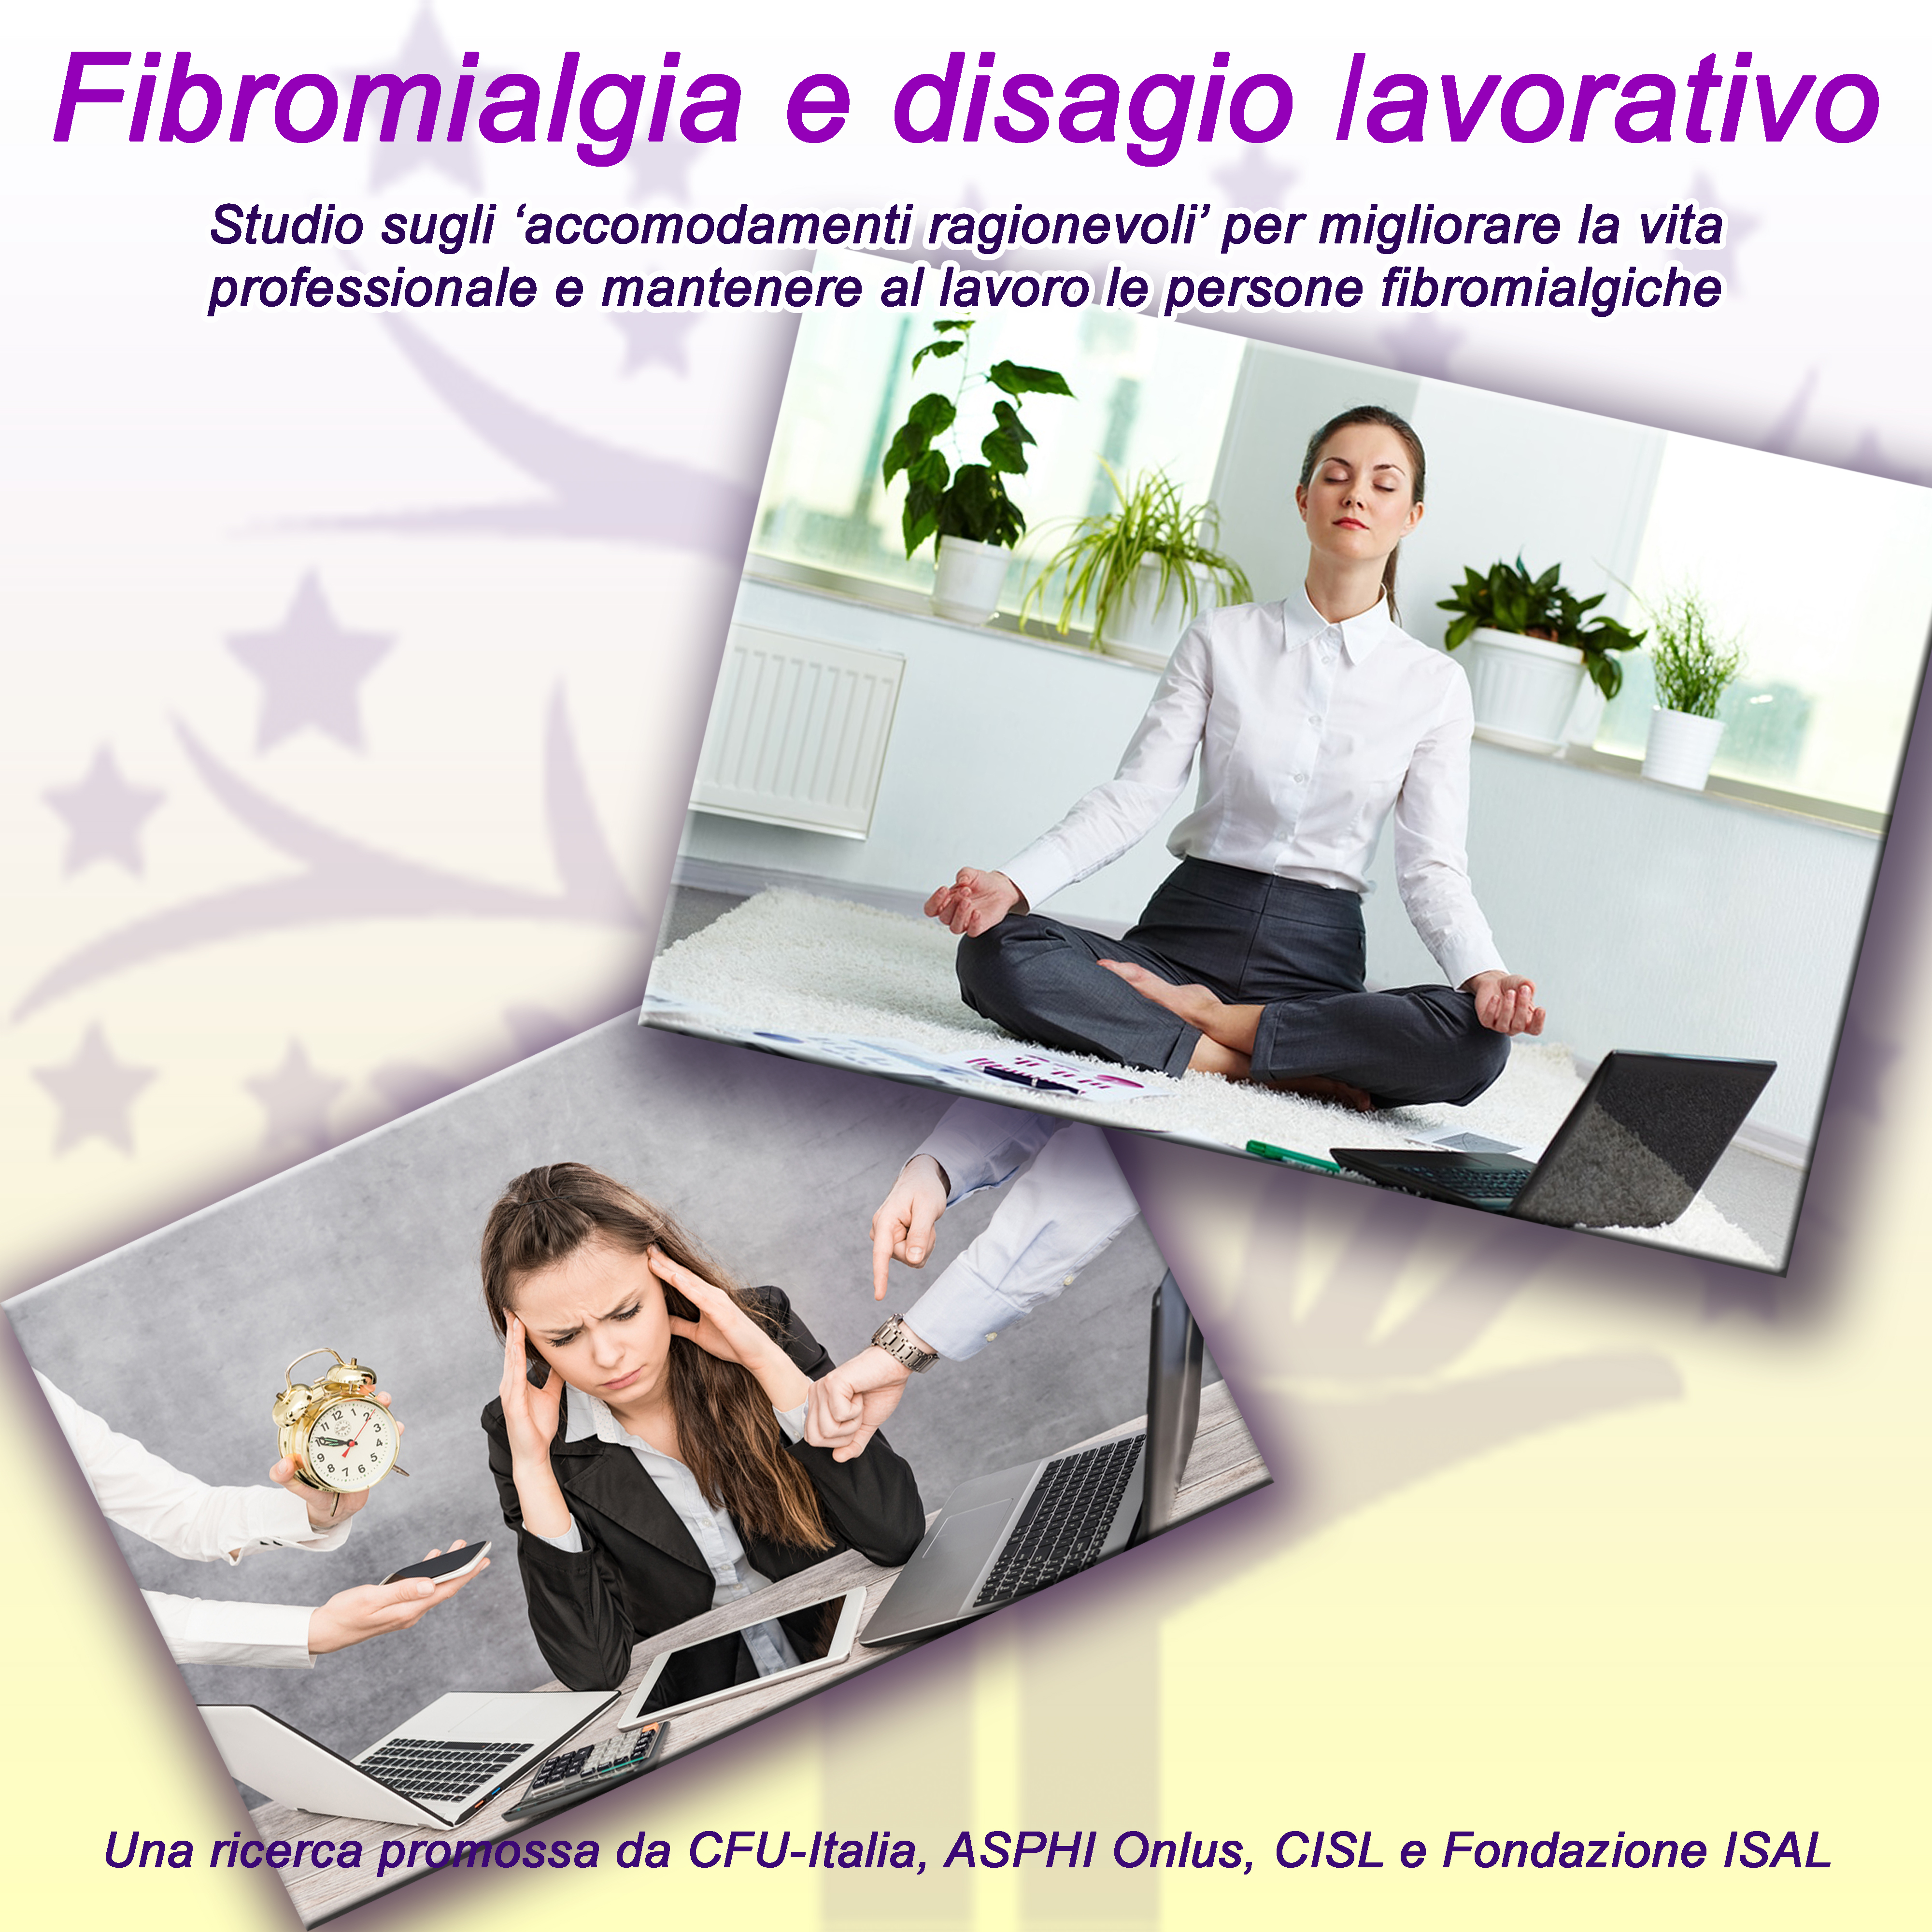 Fibromialgia e disagio lavorativo